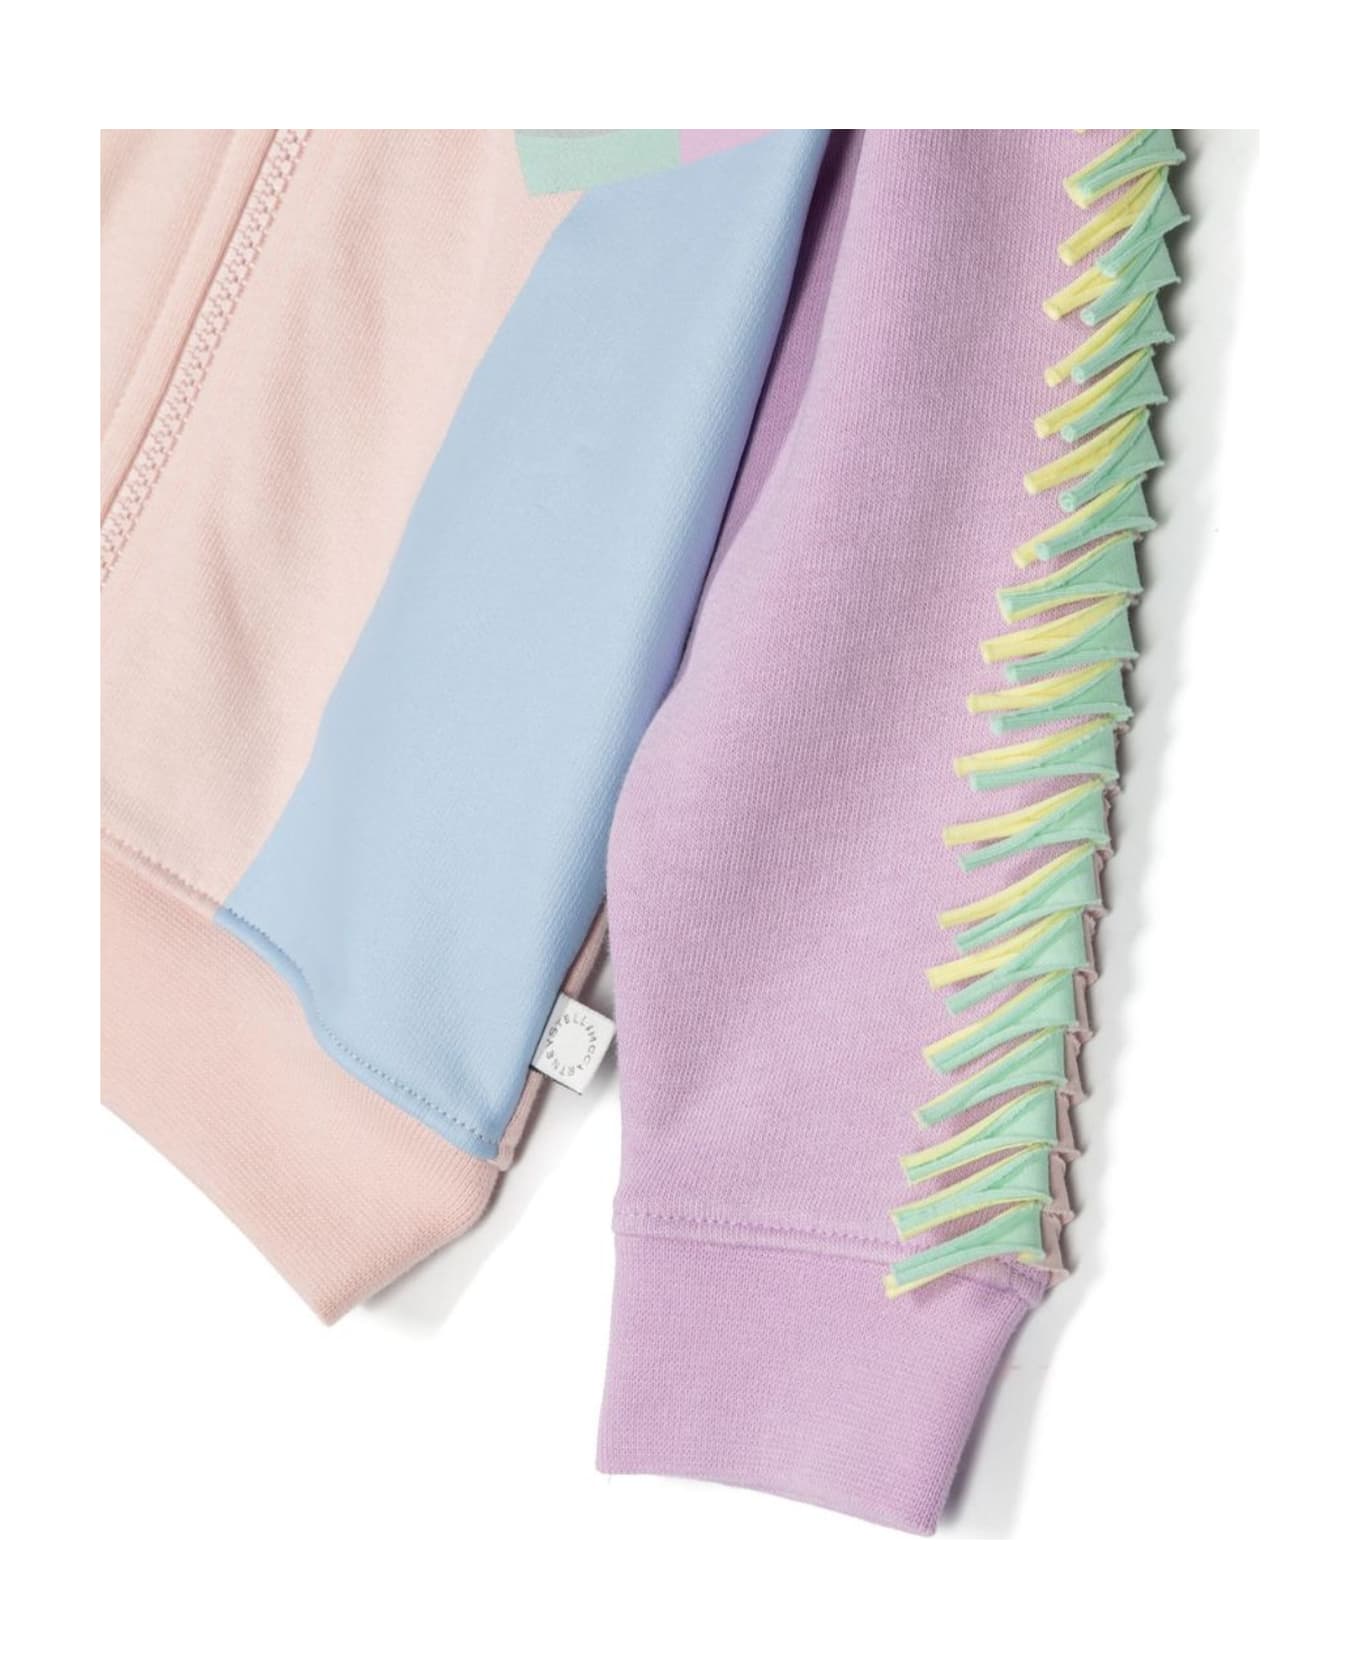 Stella McCartney Kids Sweaters Pink - Pink ニットウェア＆スウェットシャツ